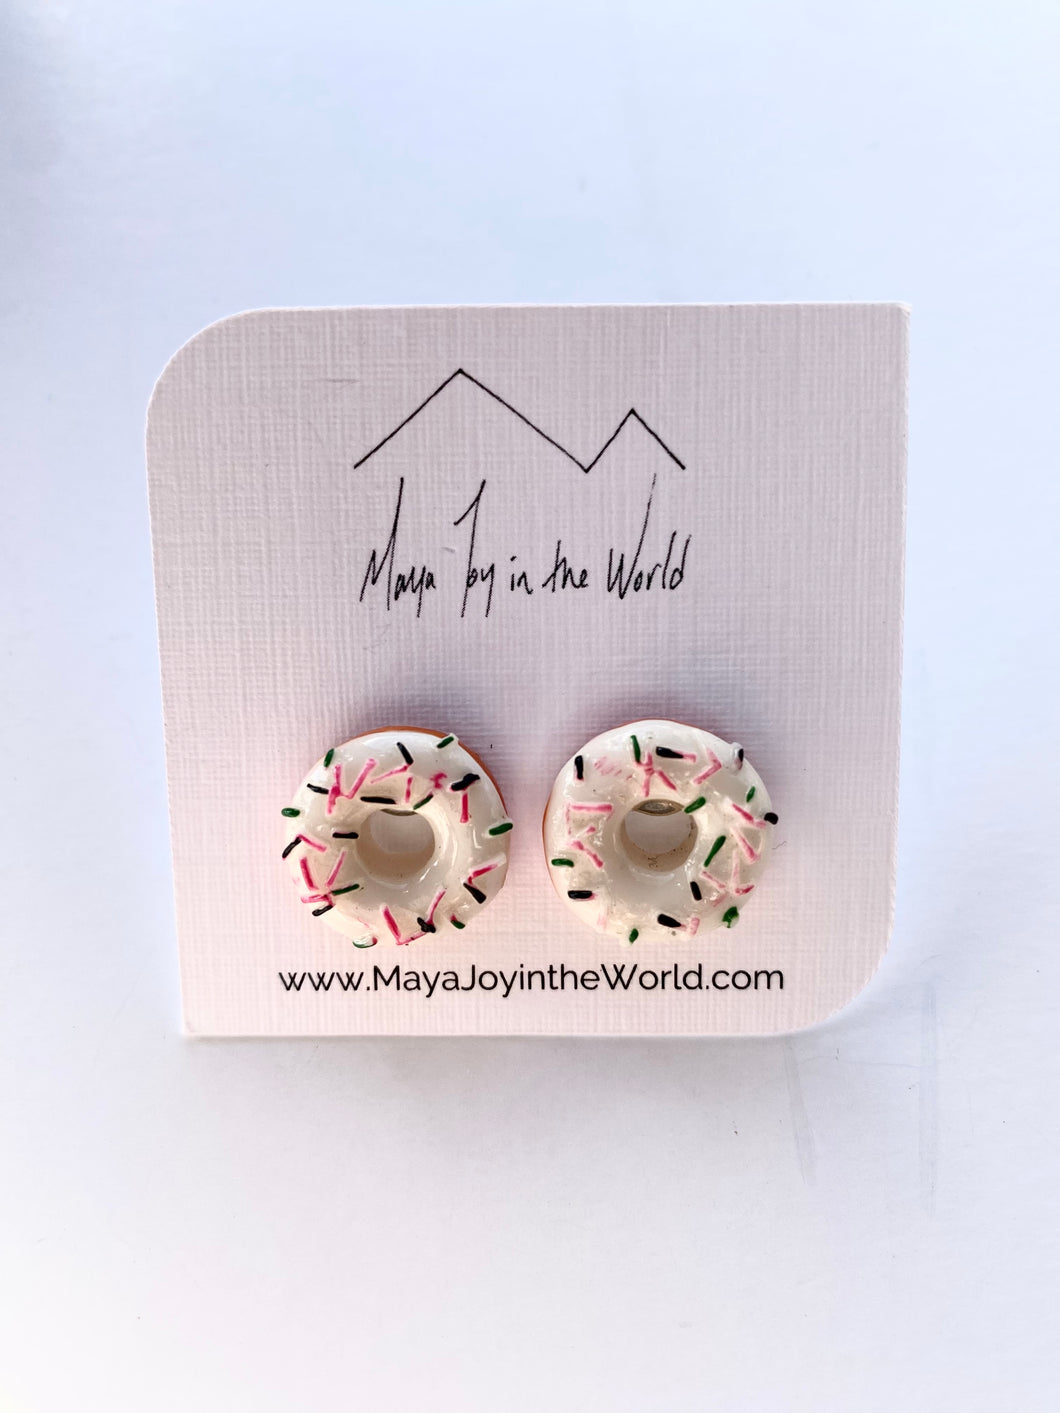 Stud Earrings - Mini Donut Studs